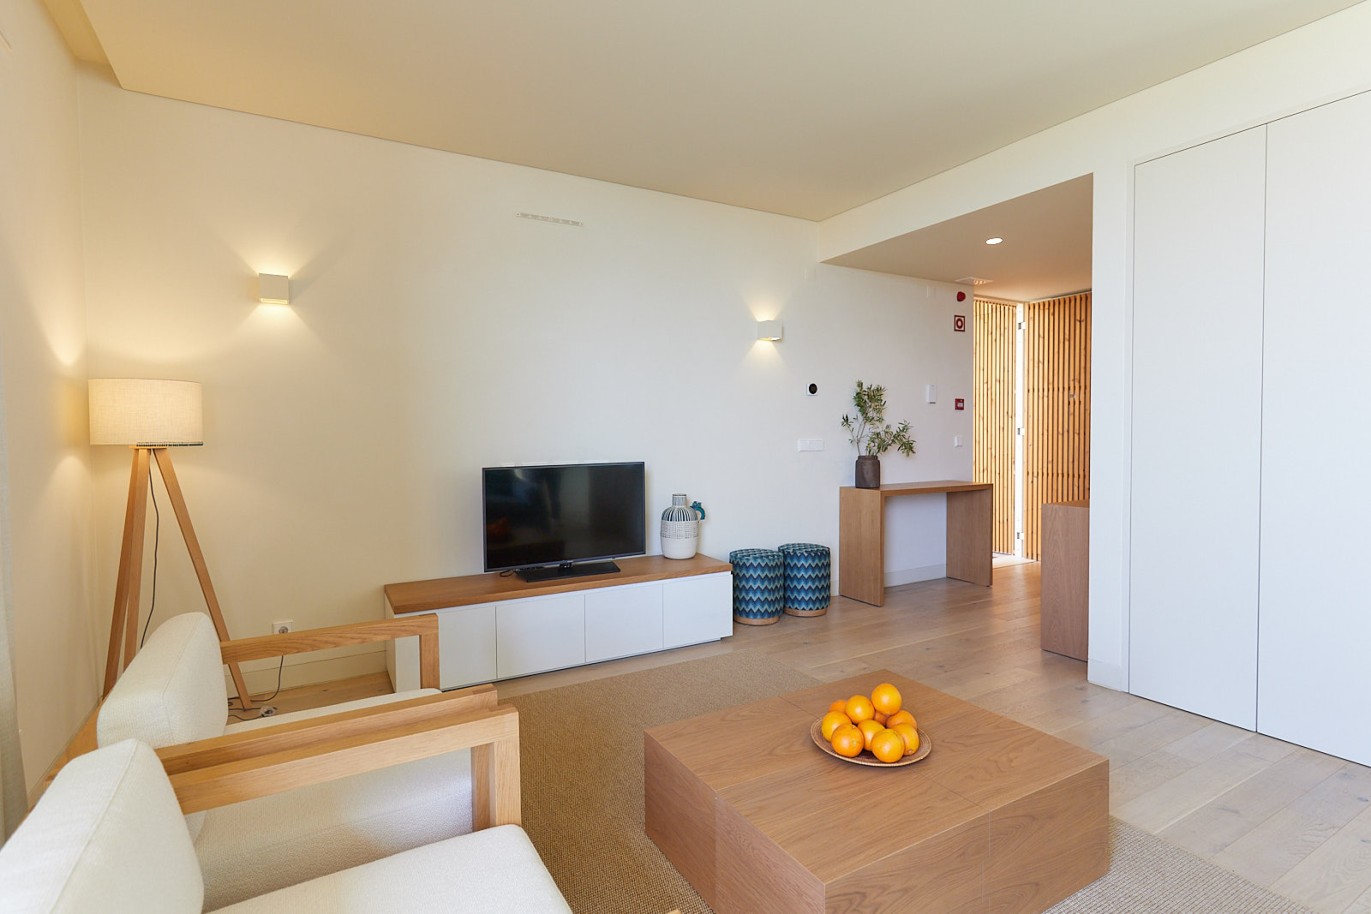 2 bedroom apartment in resort, for sale in Porches, Algarve_229252